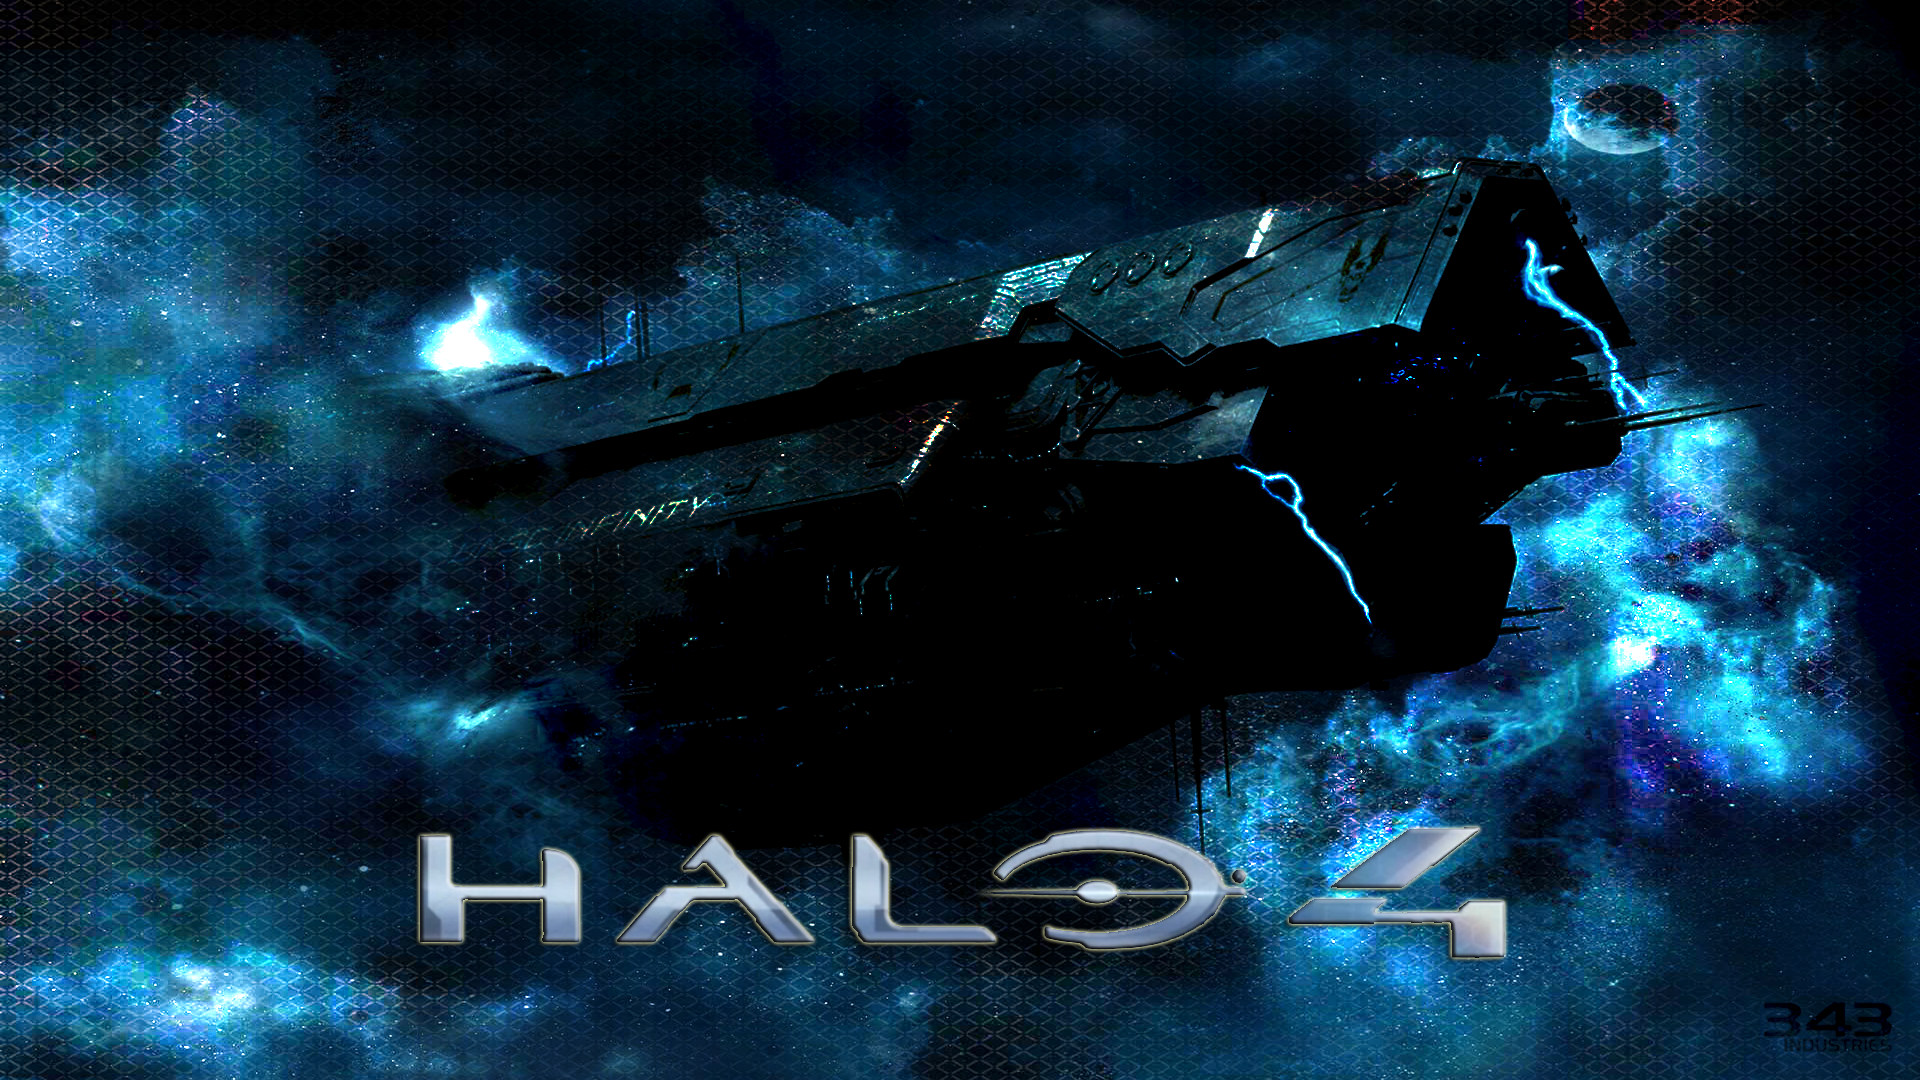 Download Halo 4 Wallpaper HD Battleship 2981 Full Size